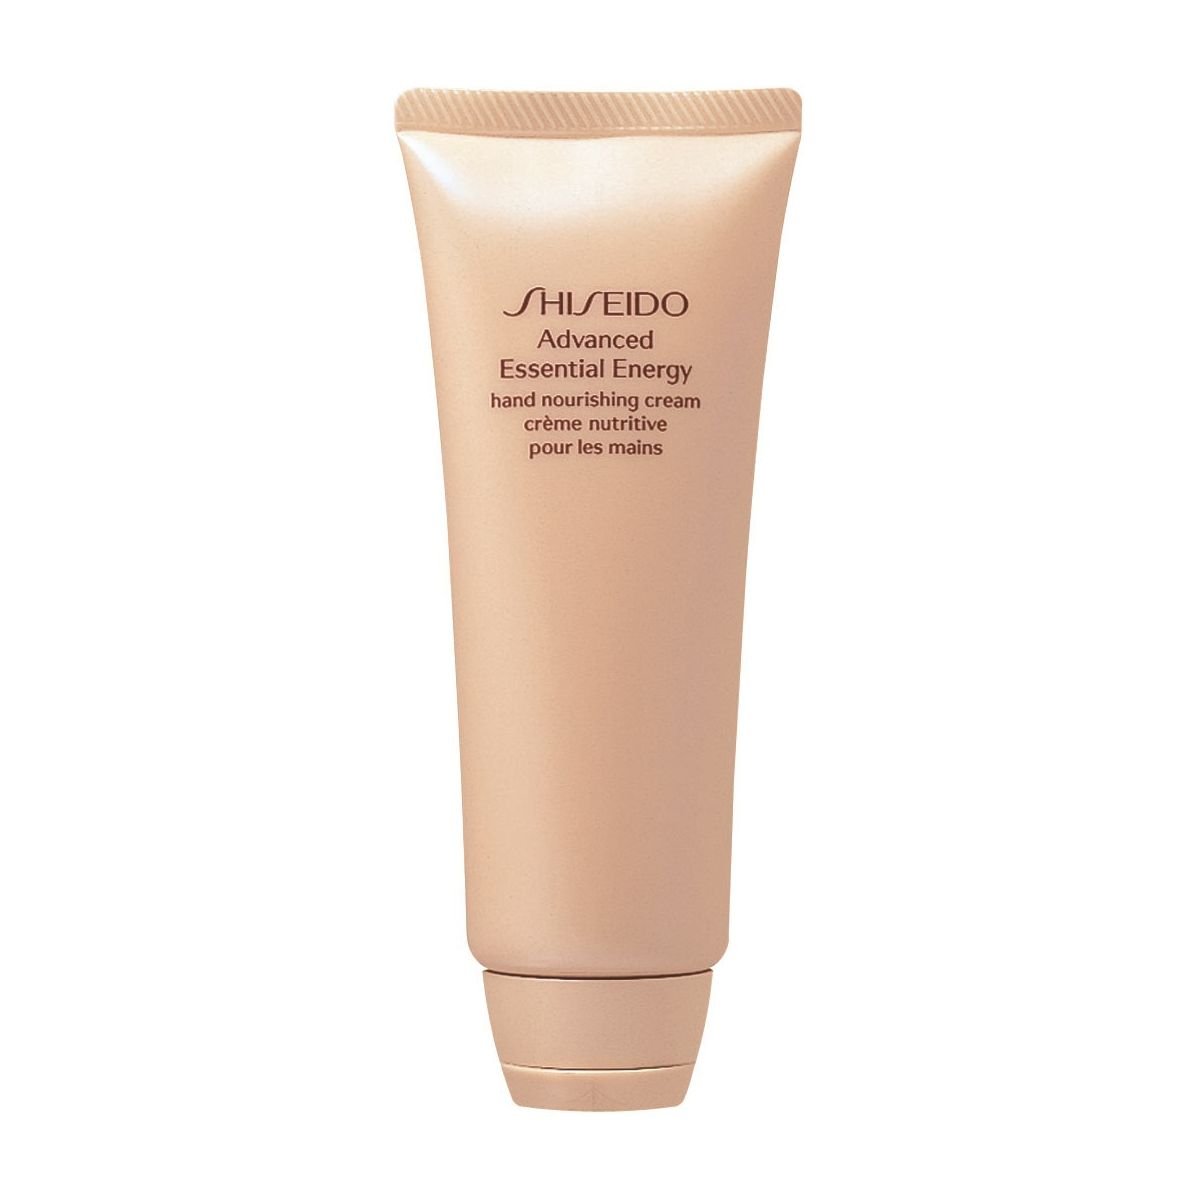 Shiseido Shiseido Advanced Essential Energy femme/woman, Hand Nourishing Cream, 1er Pack (1 x 100 ml), Kirsche